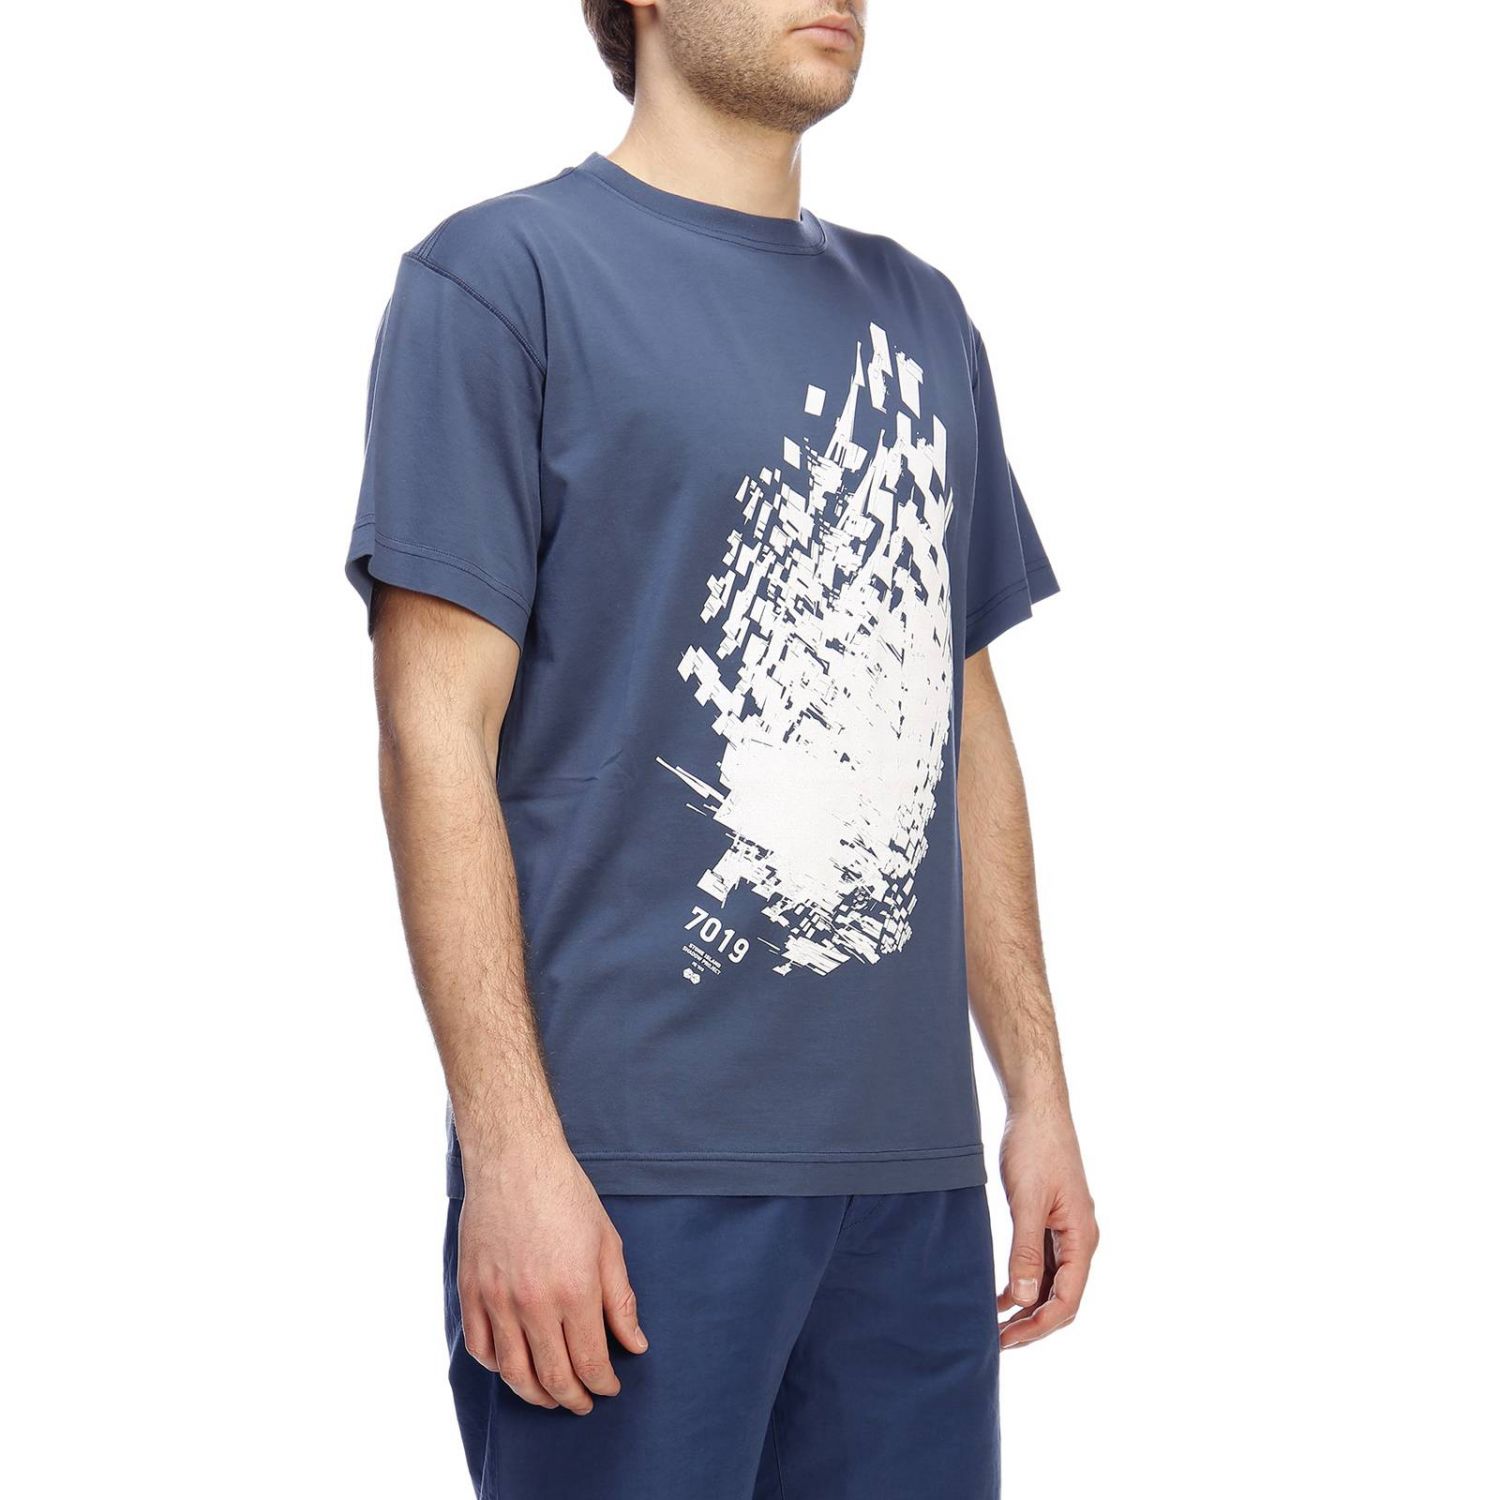 Stone Island Outlet: T-shirt men | T-Shirt Stone Island Men Blue | T ...